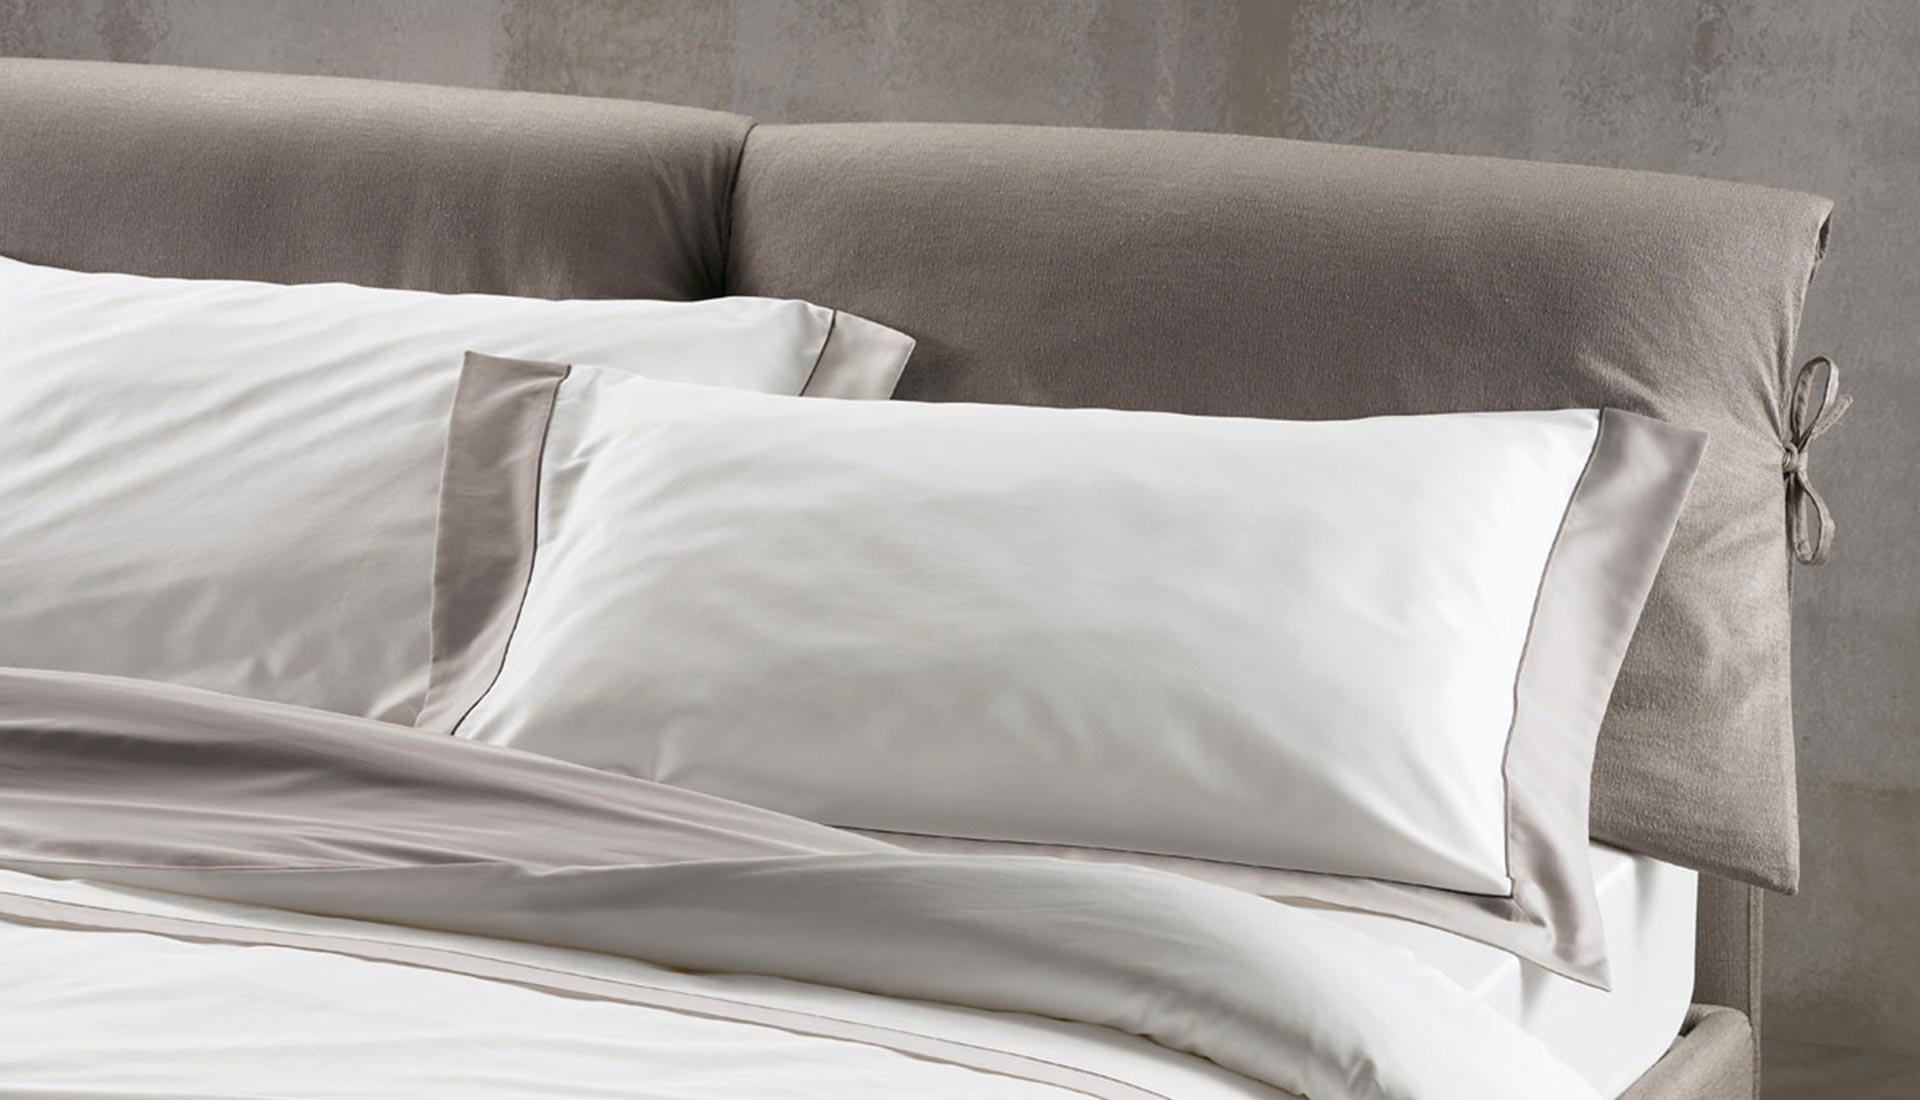 Beds - Gerosa Design